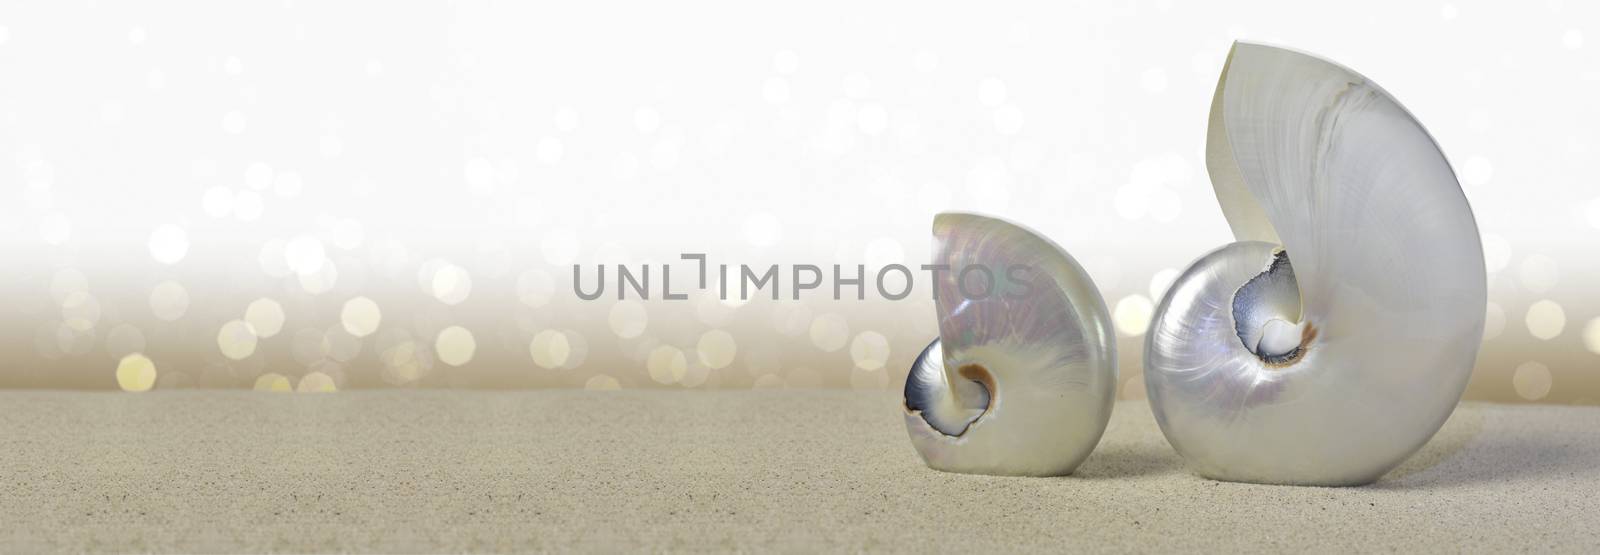 Nautilus shells on sandy beach over sparkling background